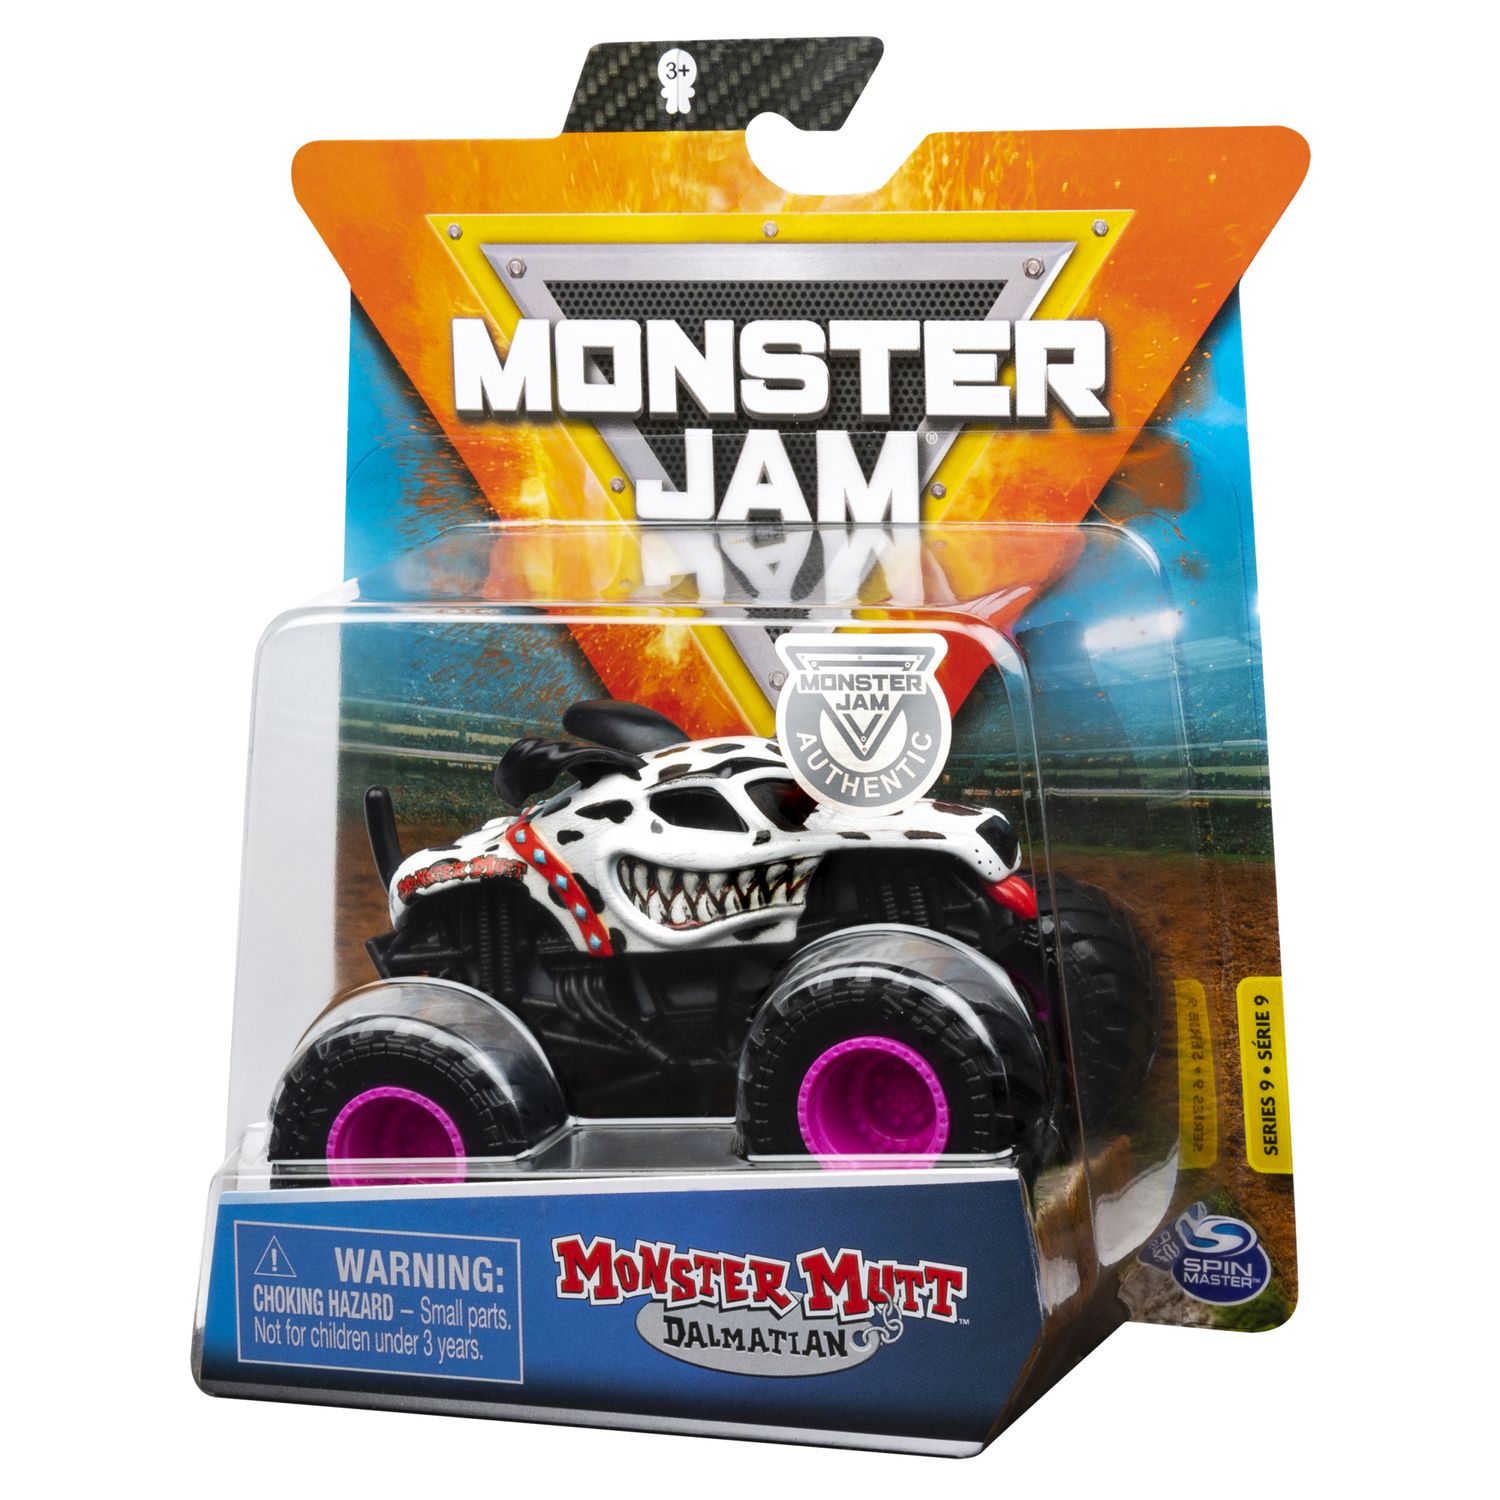 Машинка Monster Jam 1:64 Dalmation 6044941/20120660 6044941 - фото 3